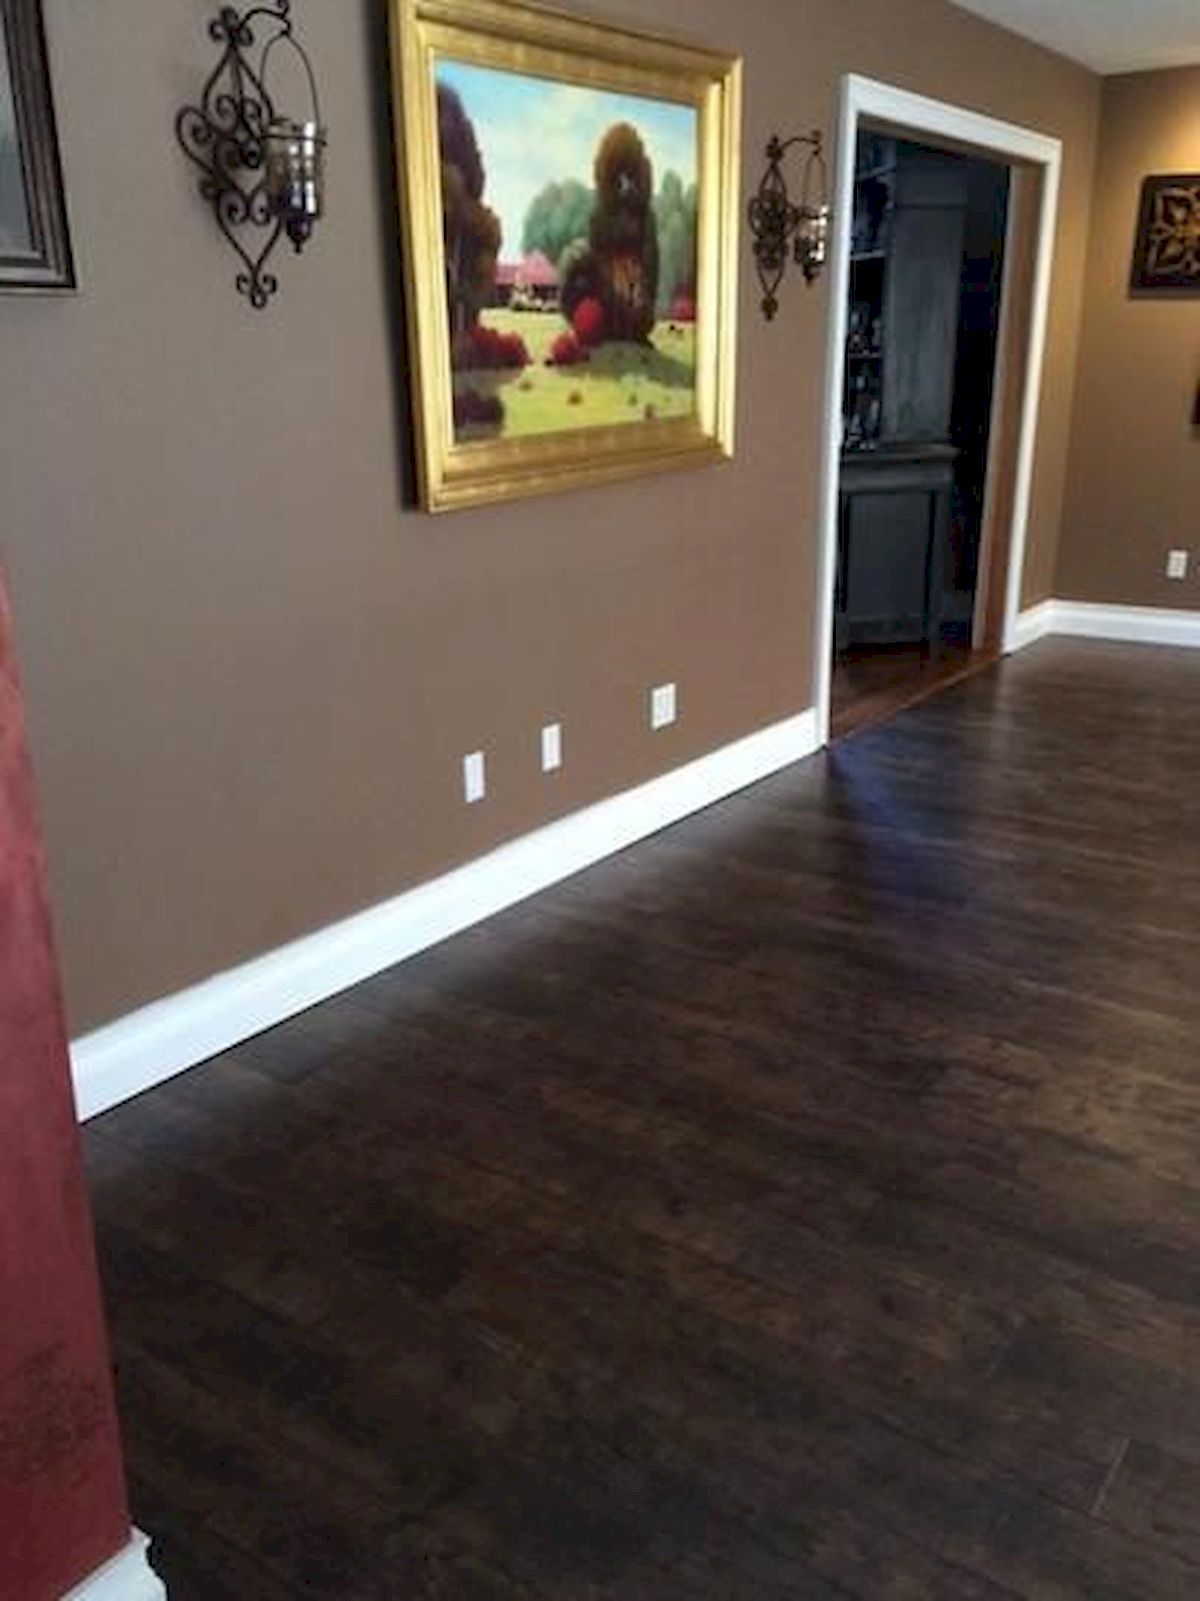 80 Gorgeous Hardwood Floor Ideas For Interior Home (68)